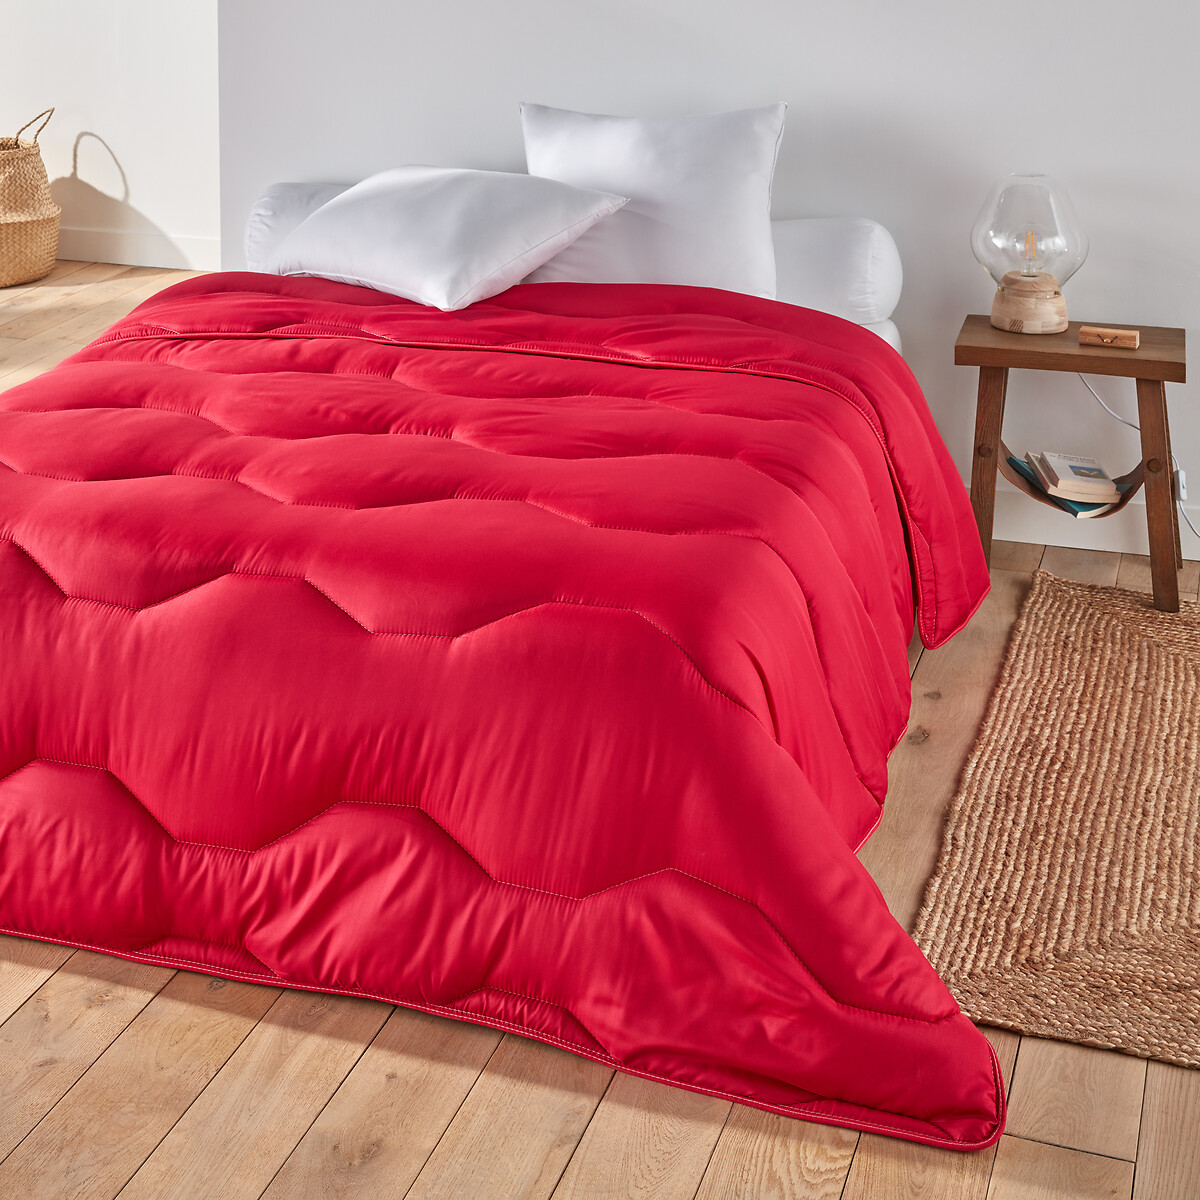 Одеяло La Redoute Из синтетики  гм 200 x 200 см красный, размер 200 x 200 см